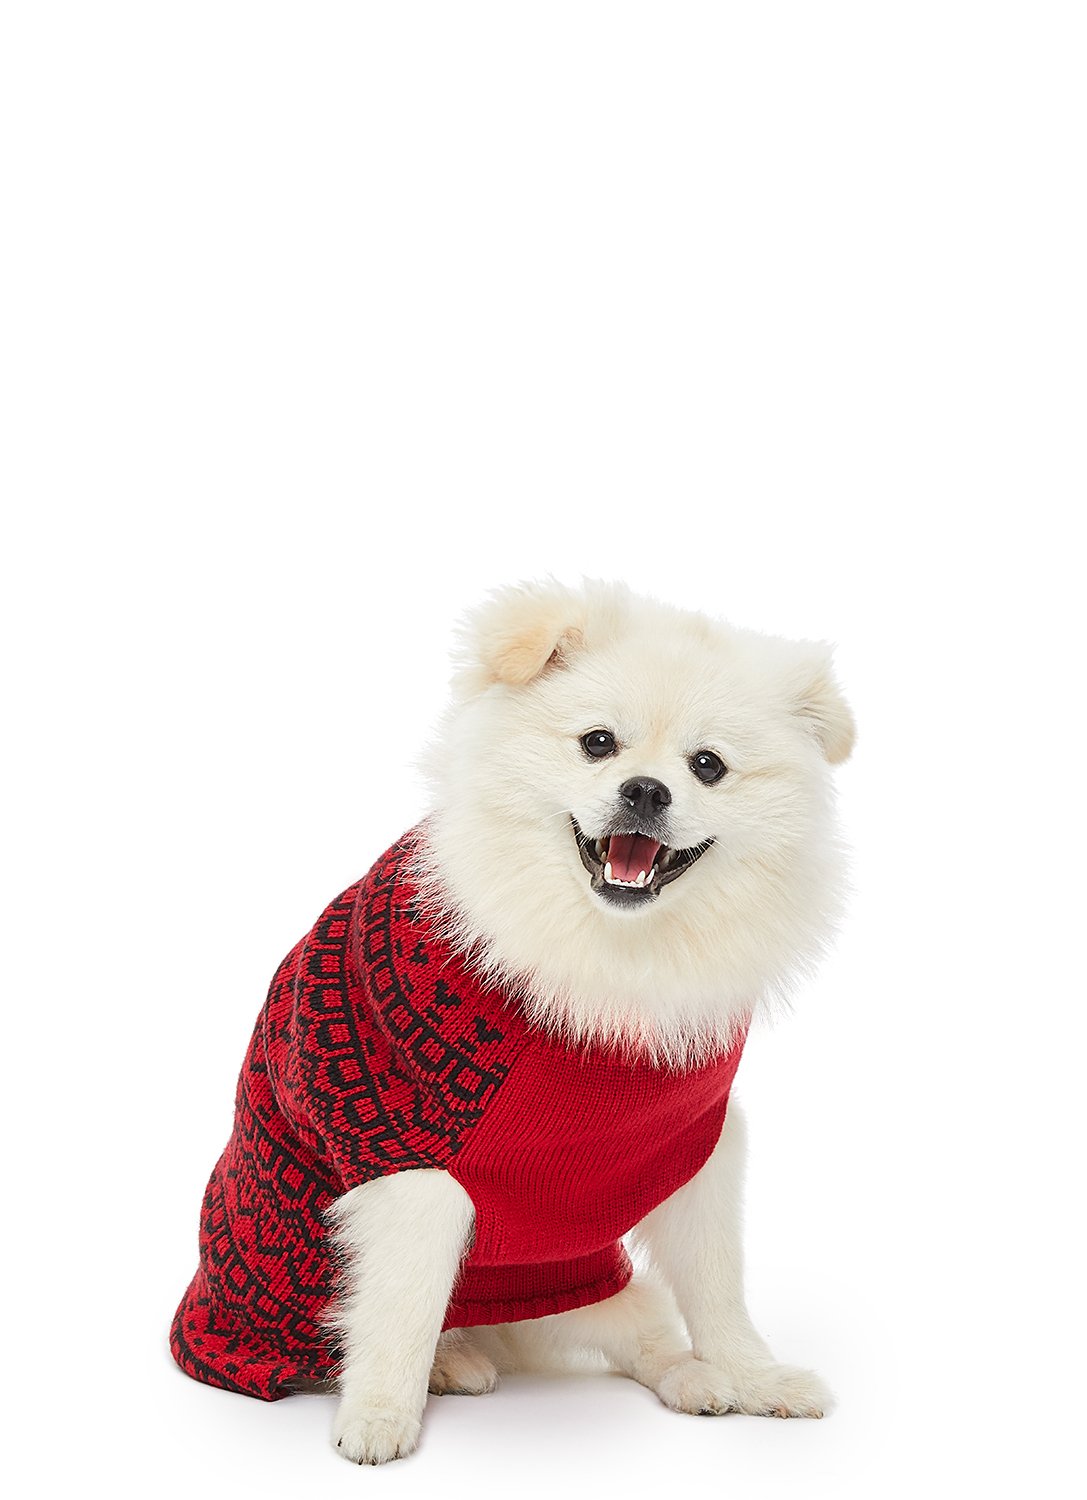 Dog wearing Red Plaid Sleepwear